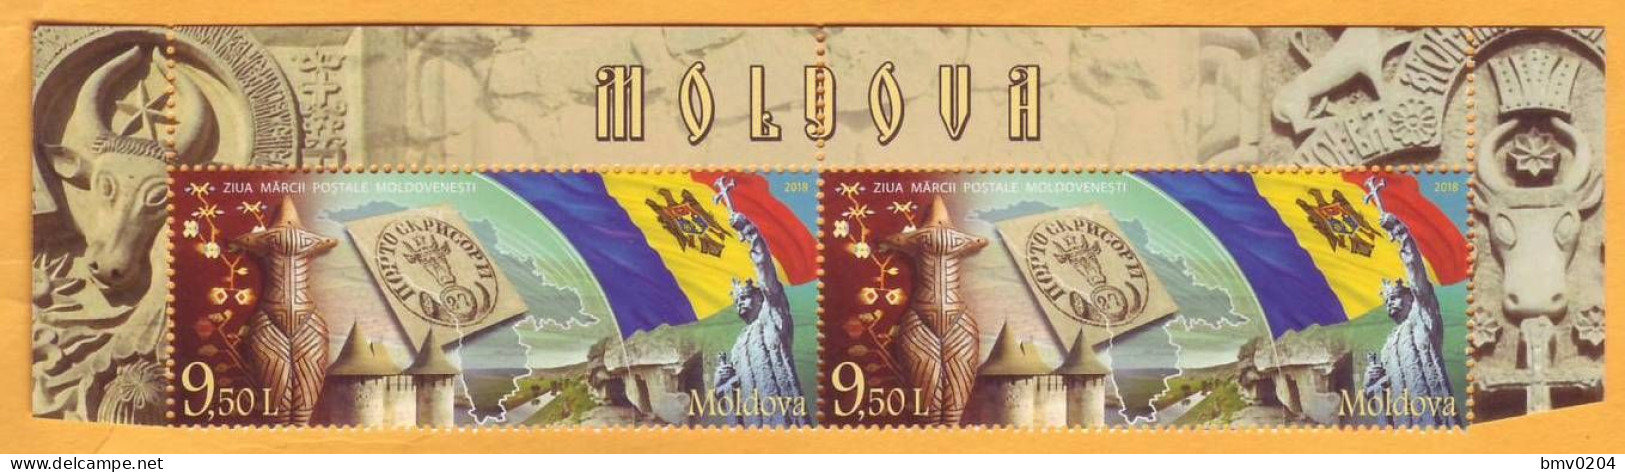 2018 Moldova Moldavie Moldau "Moldovan Postmark Day". Romania  2 Stamps Mint - Moldova